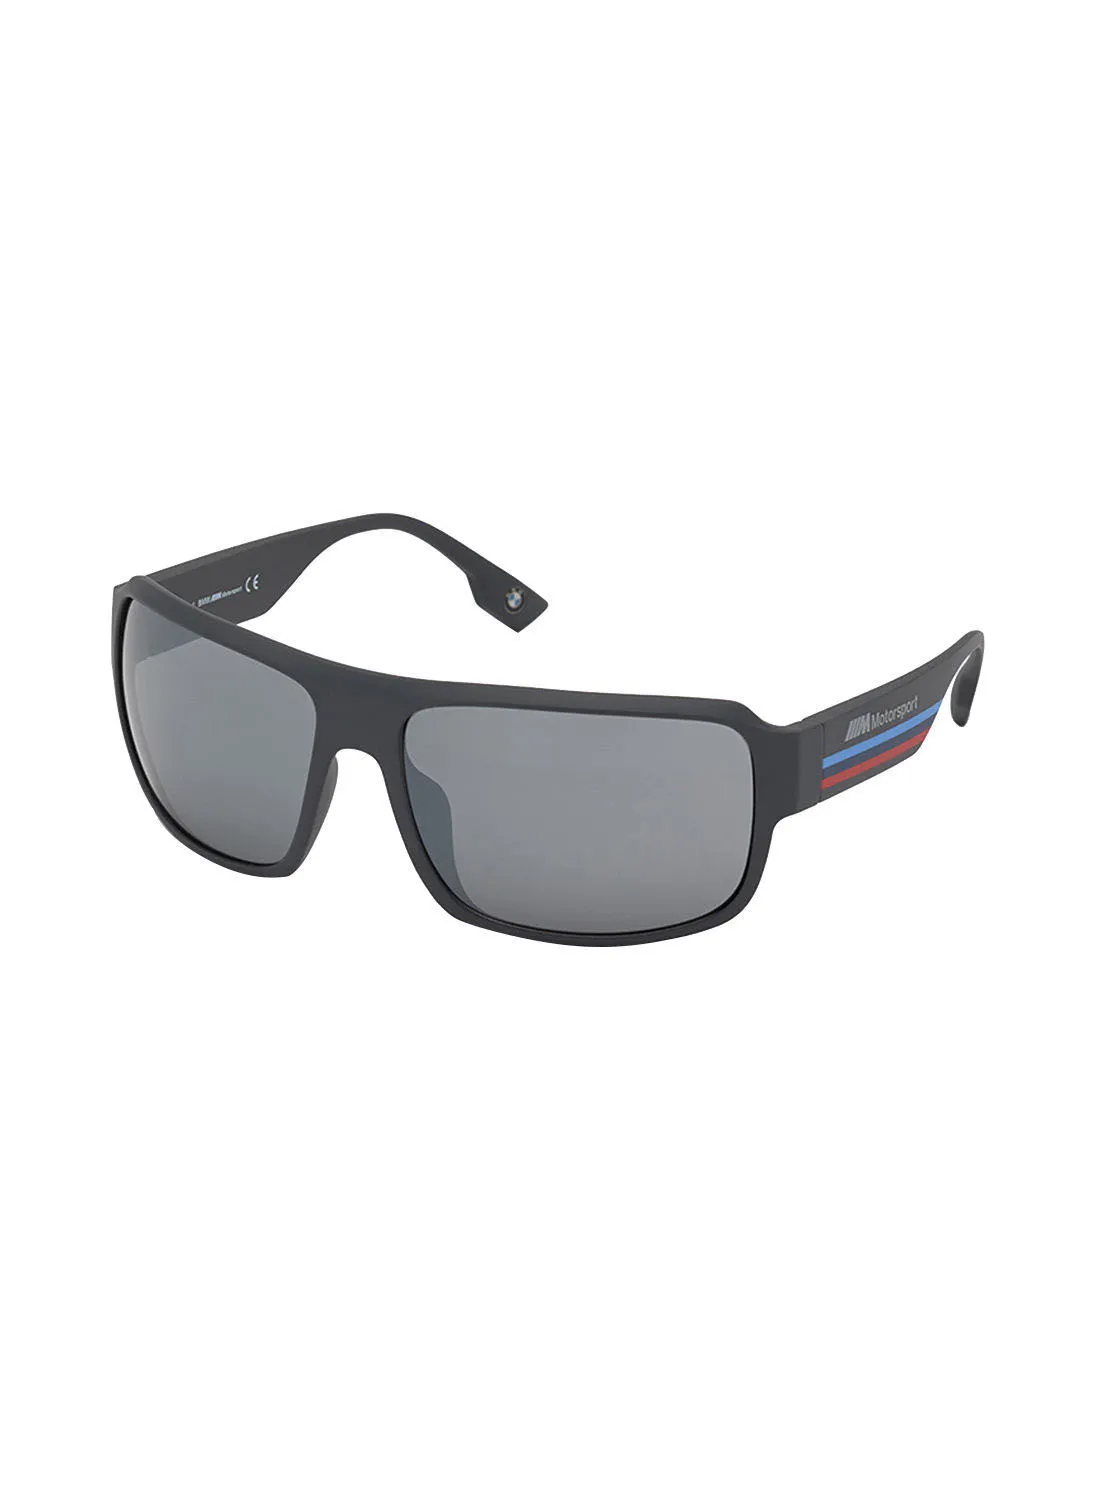 BMW Men's Navigator Sunglasses BS000820C64